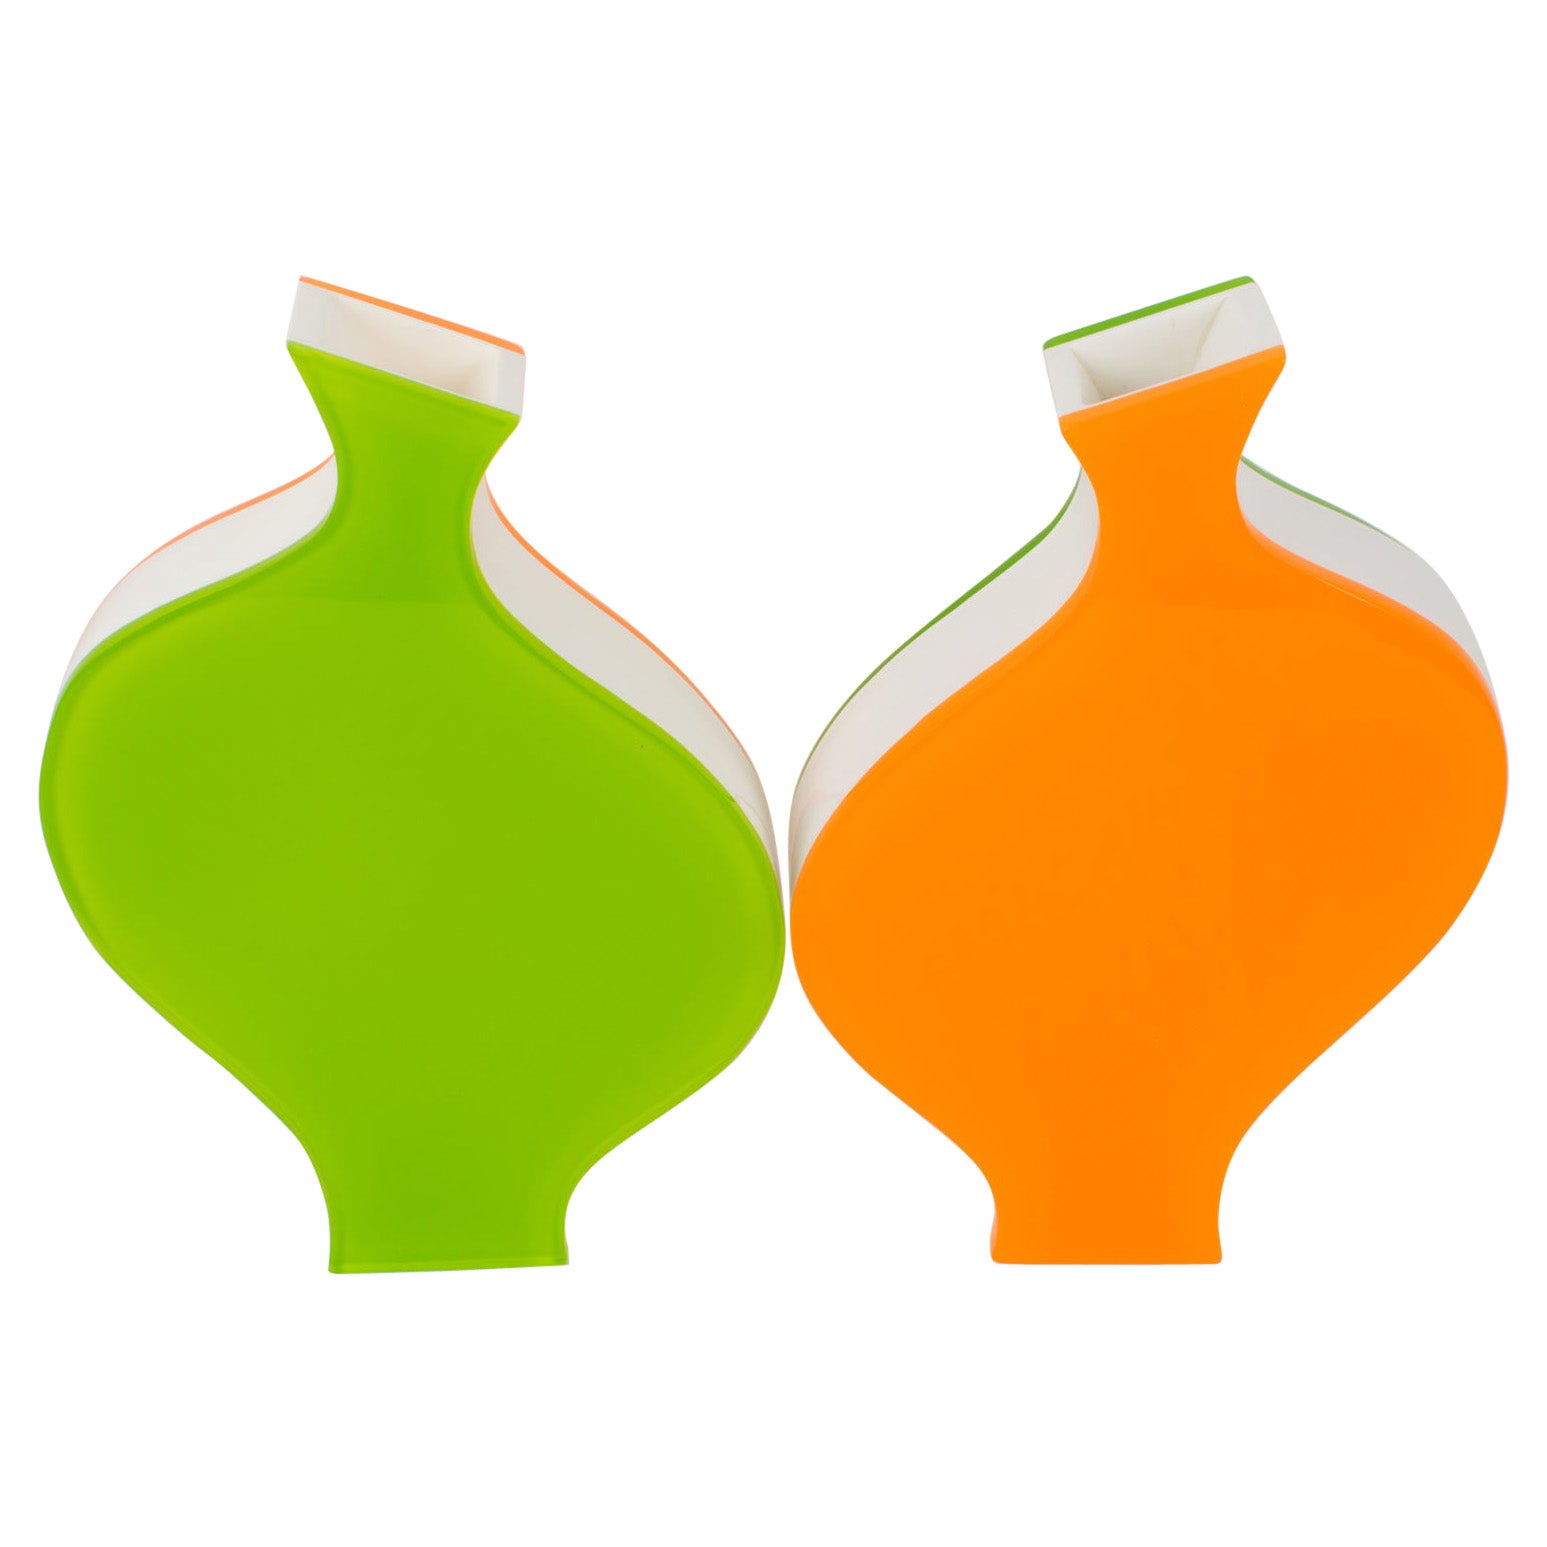 Villeroy & Boch Orange and Green Plexiglass or Lucite Vases, 1990s